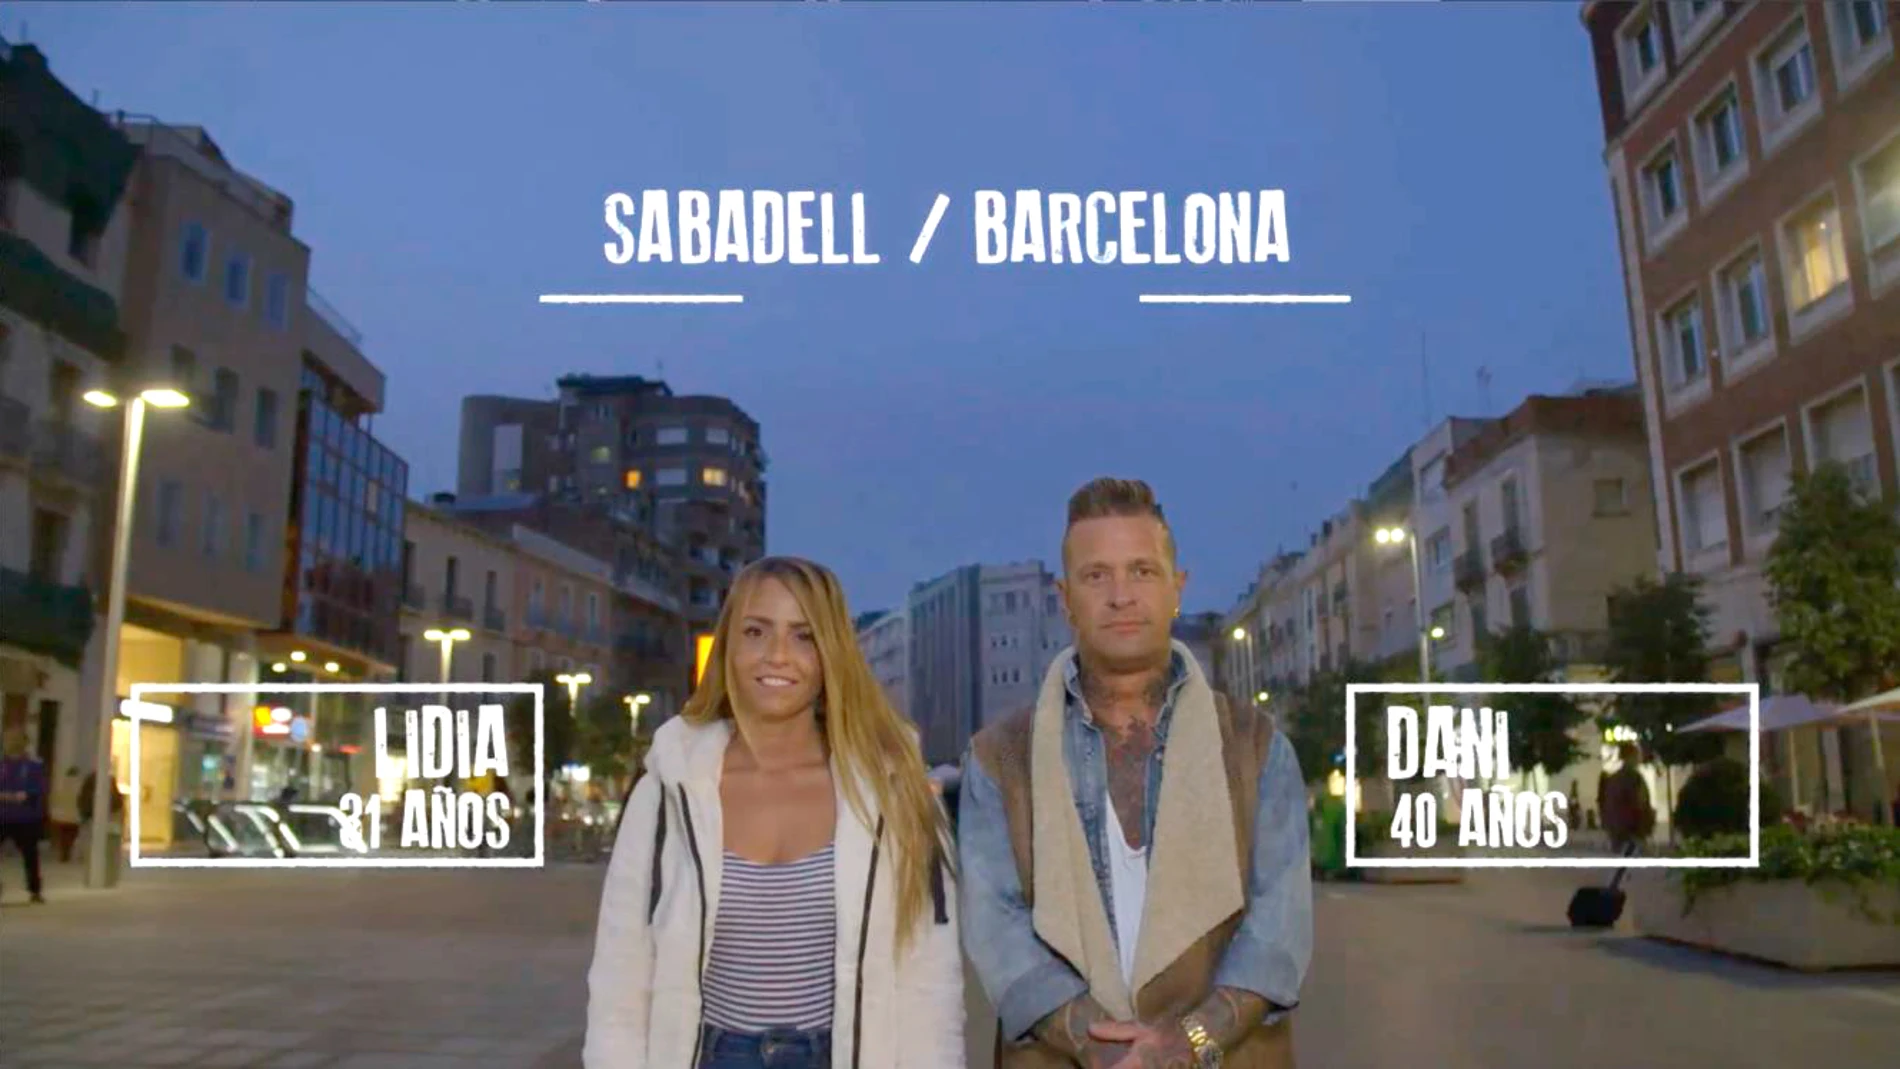 Lidia y Dani de Barcelona